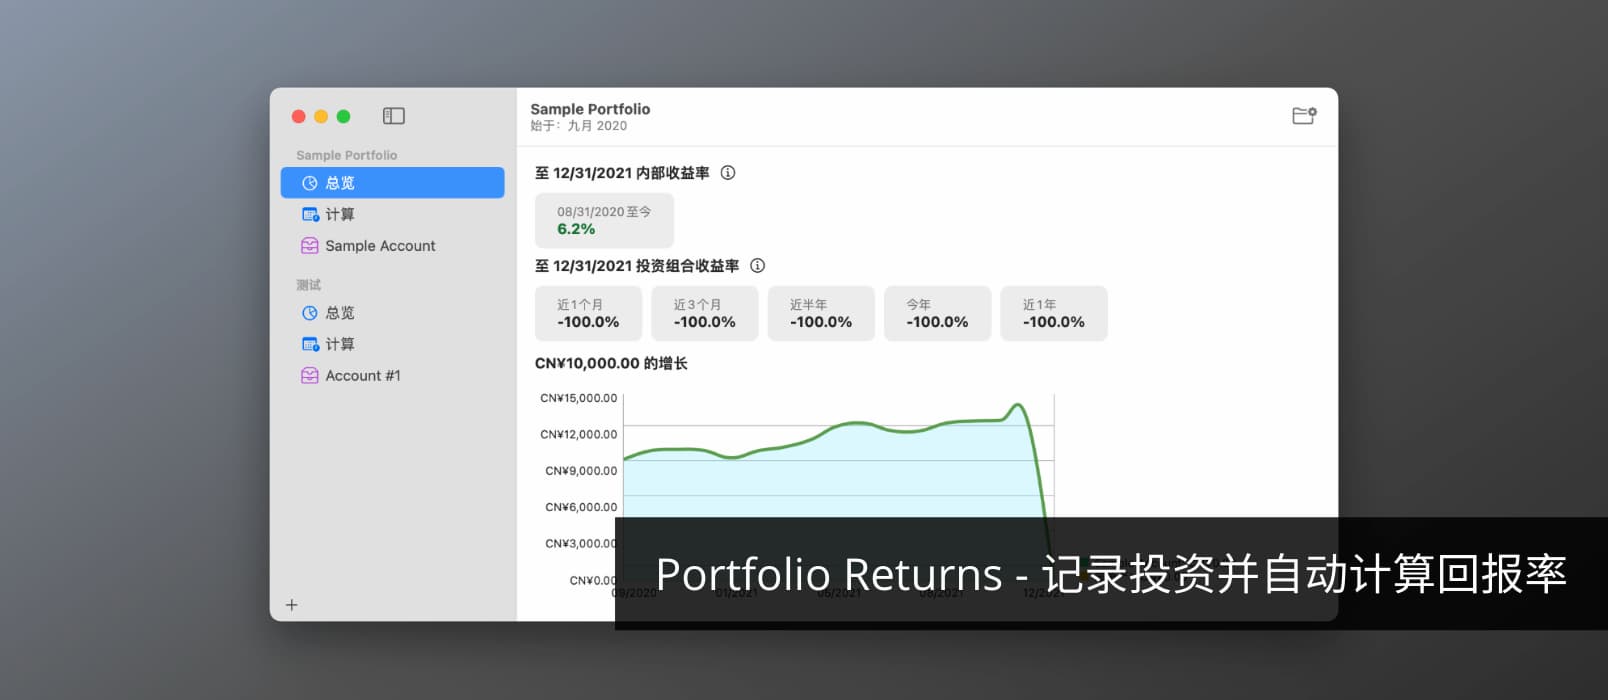 Portfolio Returns - 2个步骤，记录投资并自动计算回报率[macOS]